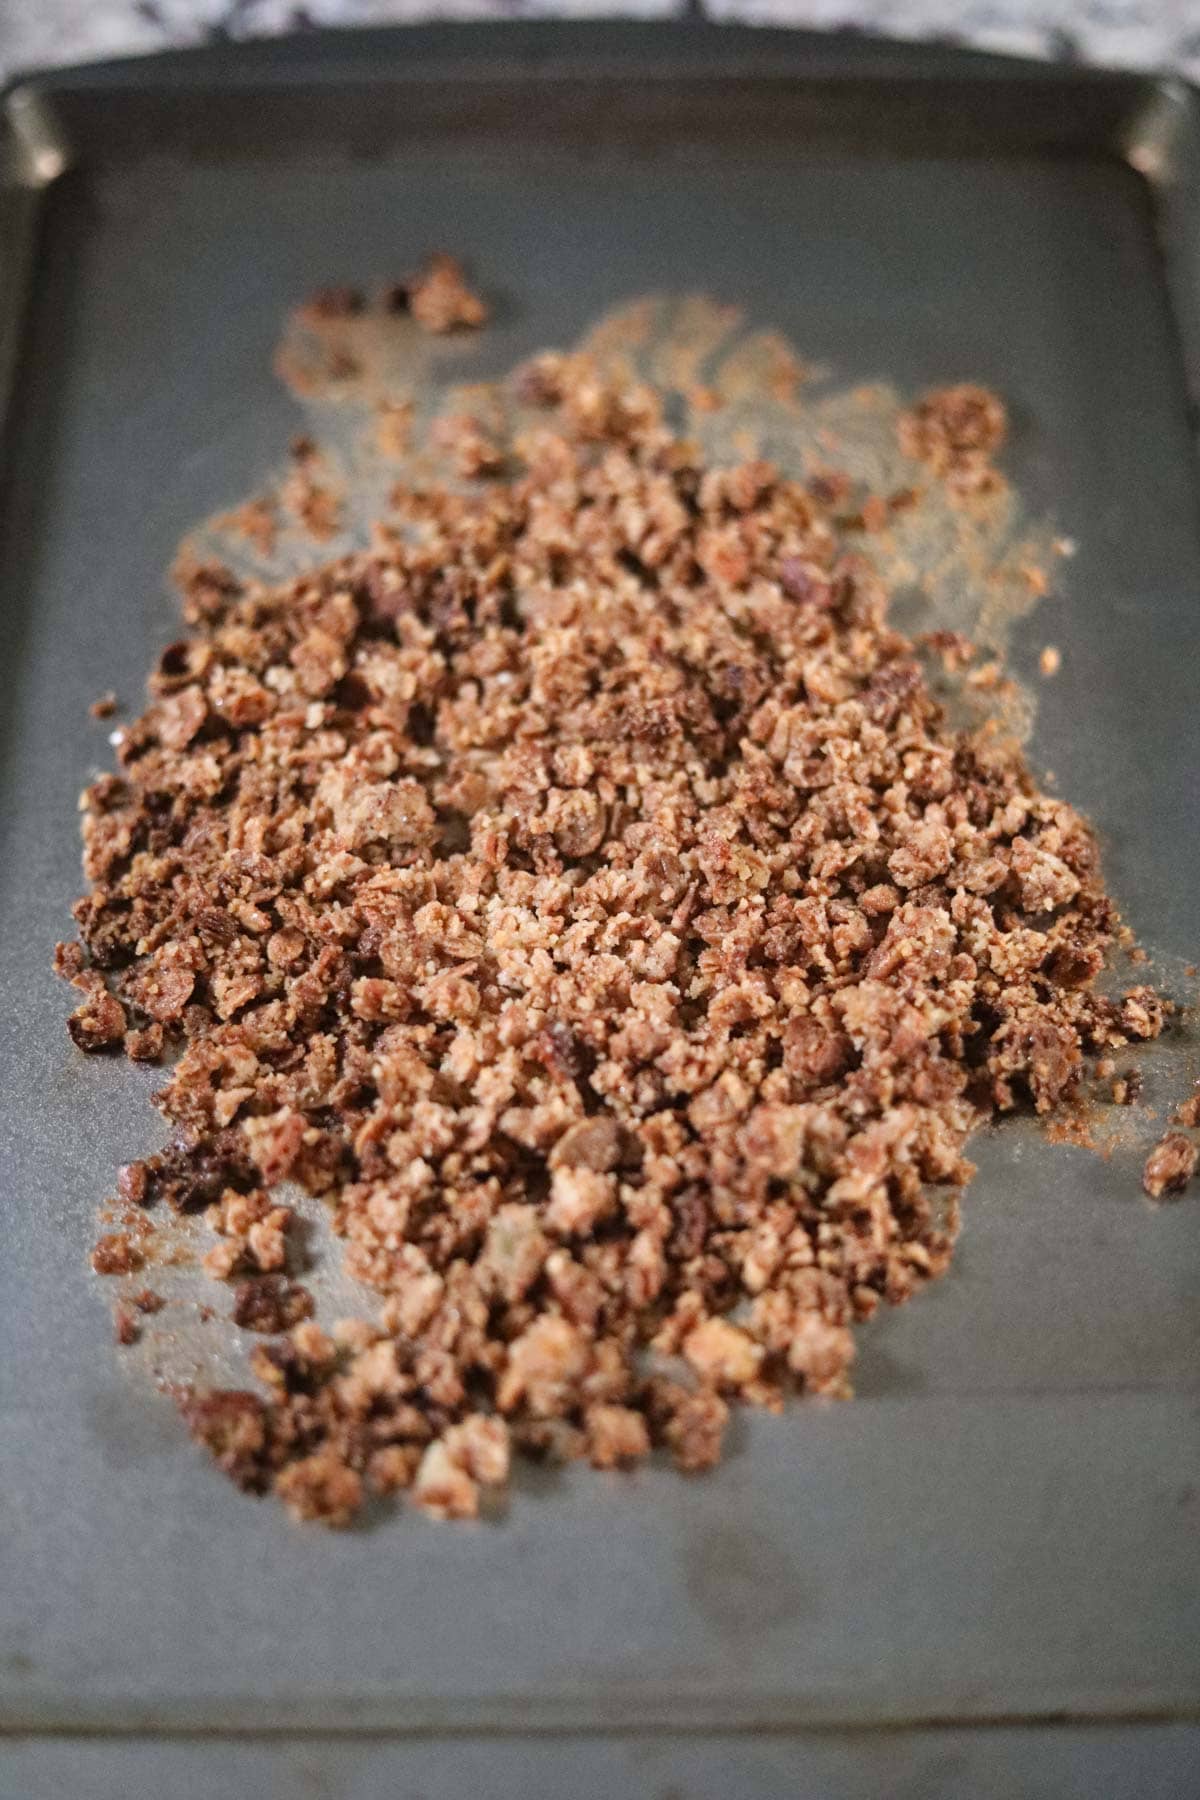 granola crumble topping on a baking sheet.